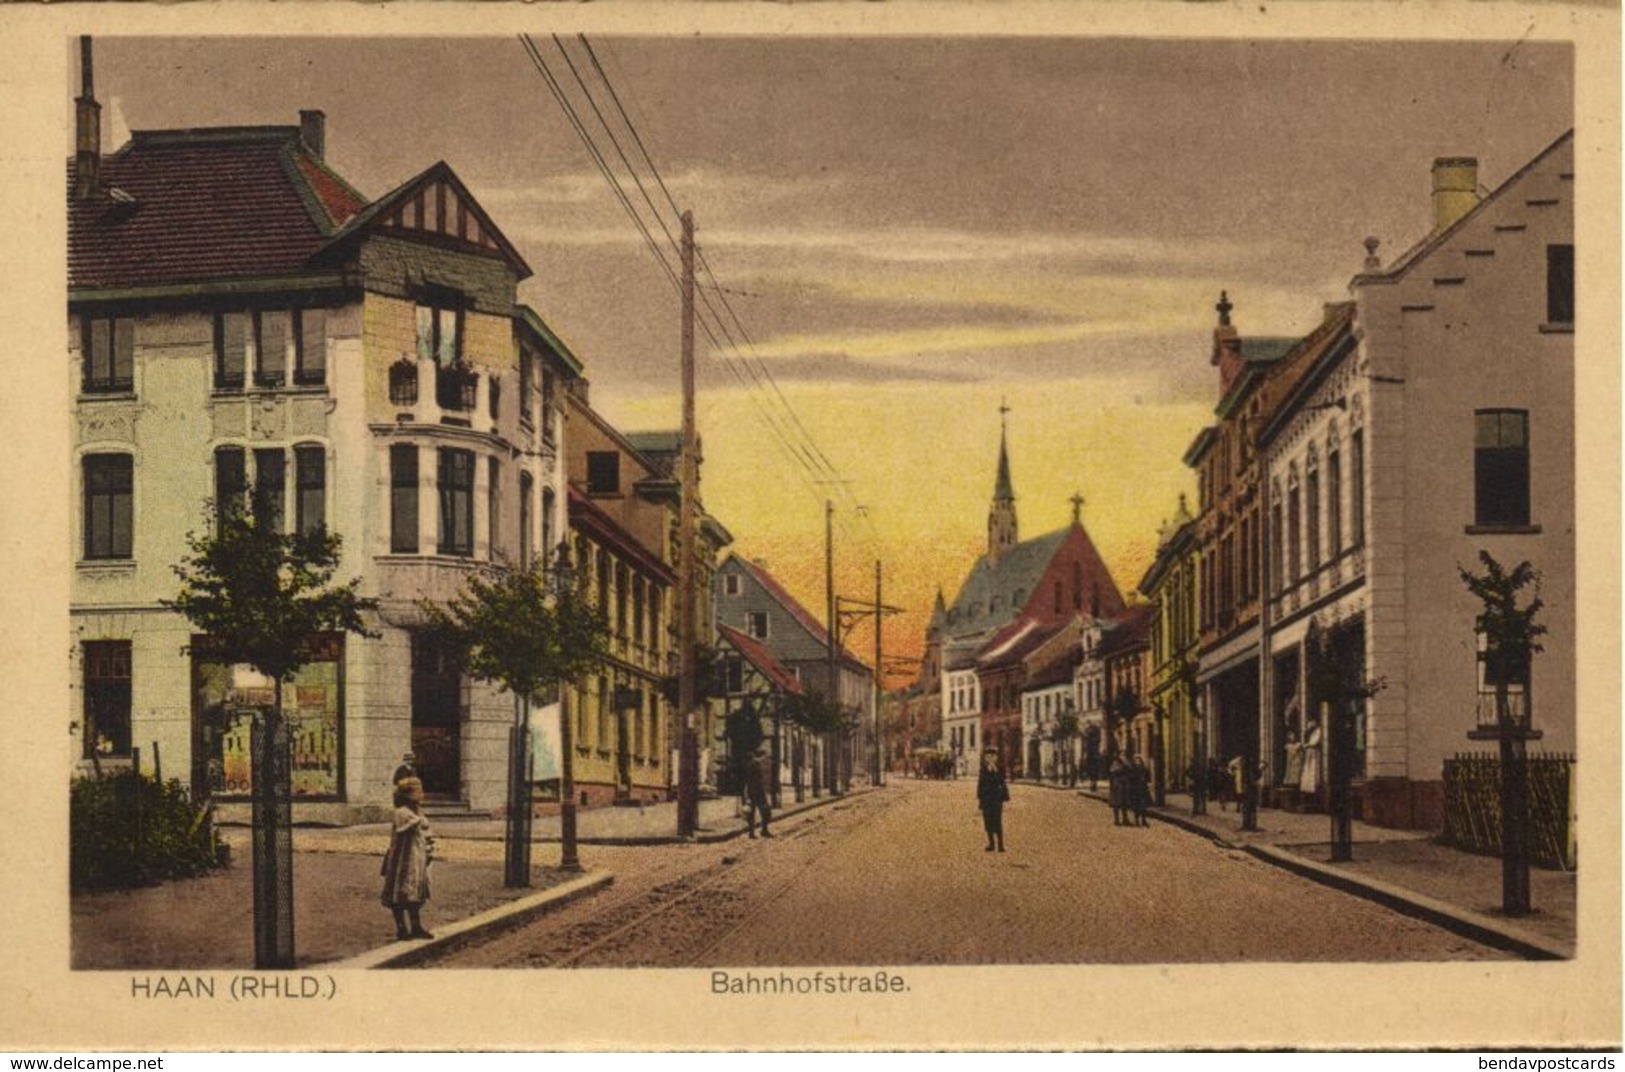 HAAN, Rhld., Bahnhofstrasse (1920s) AK - Haan